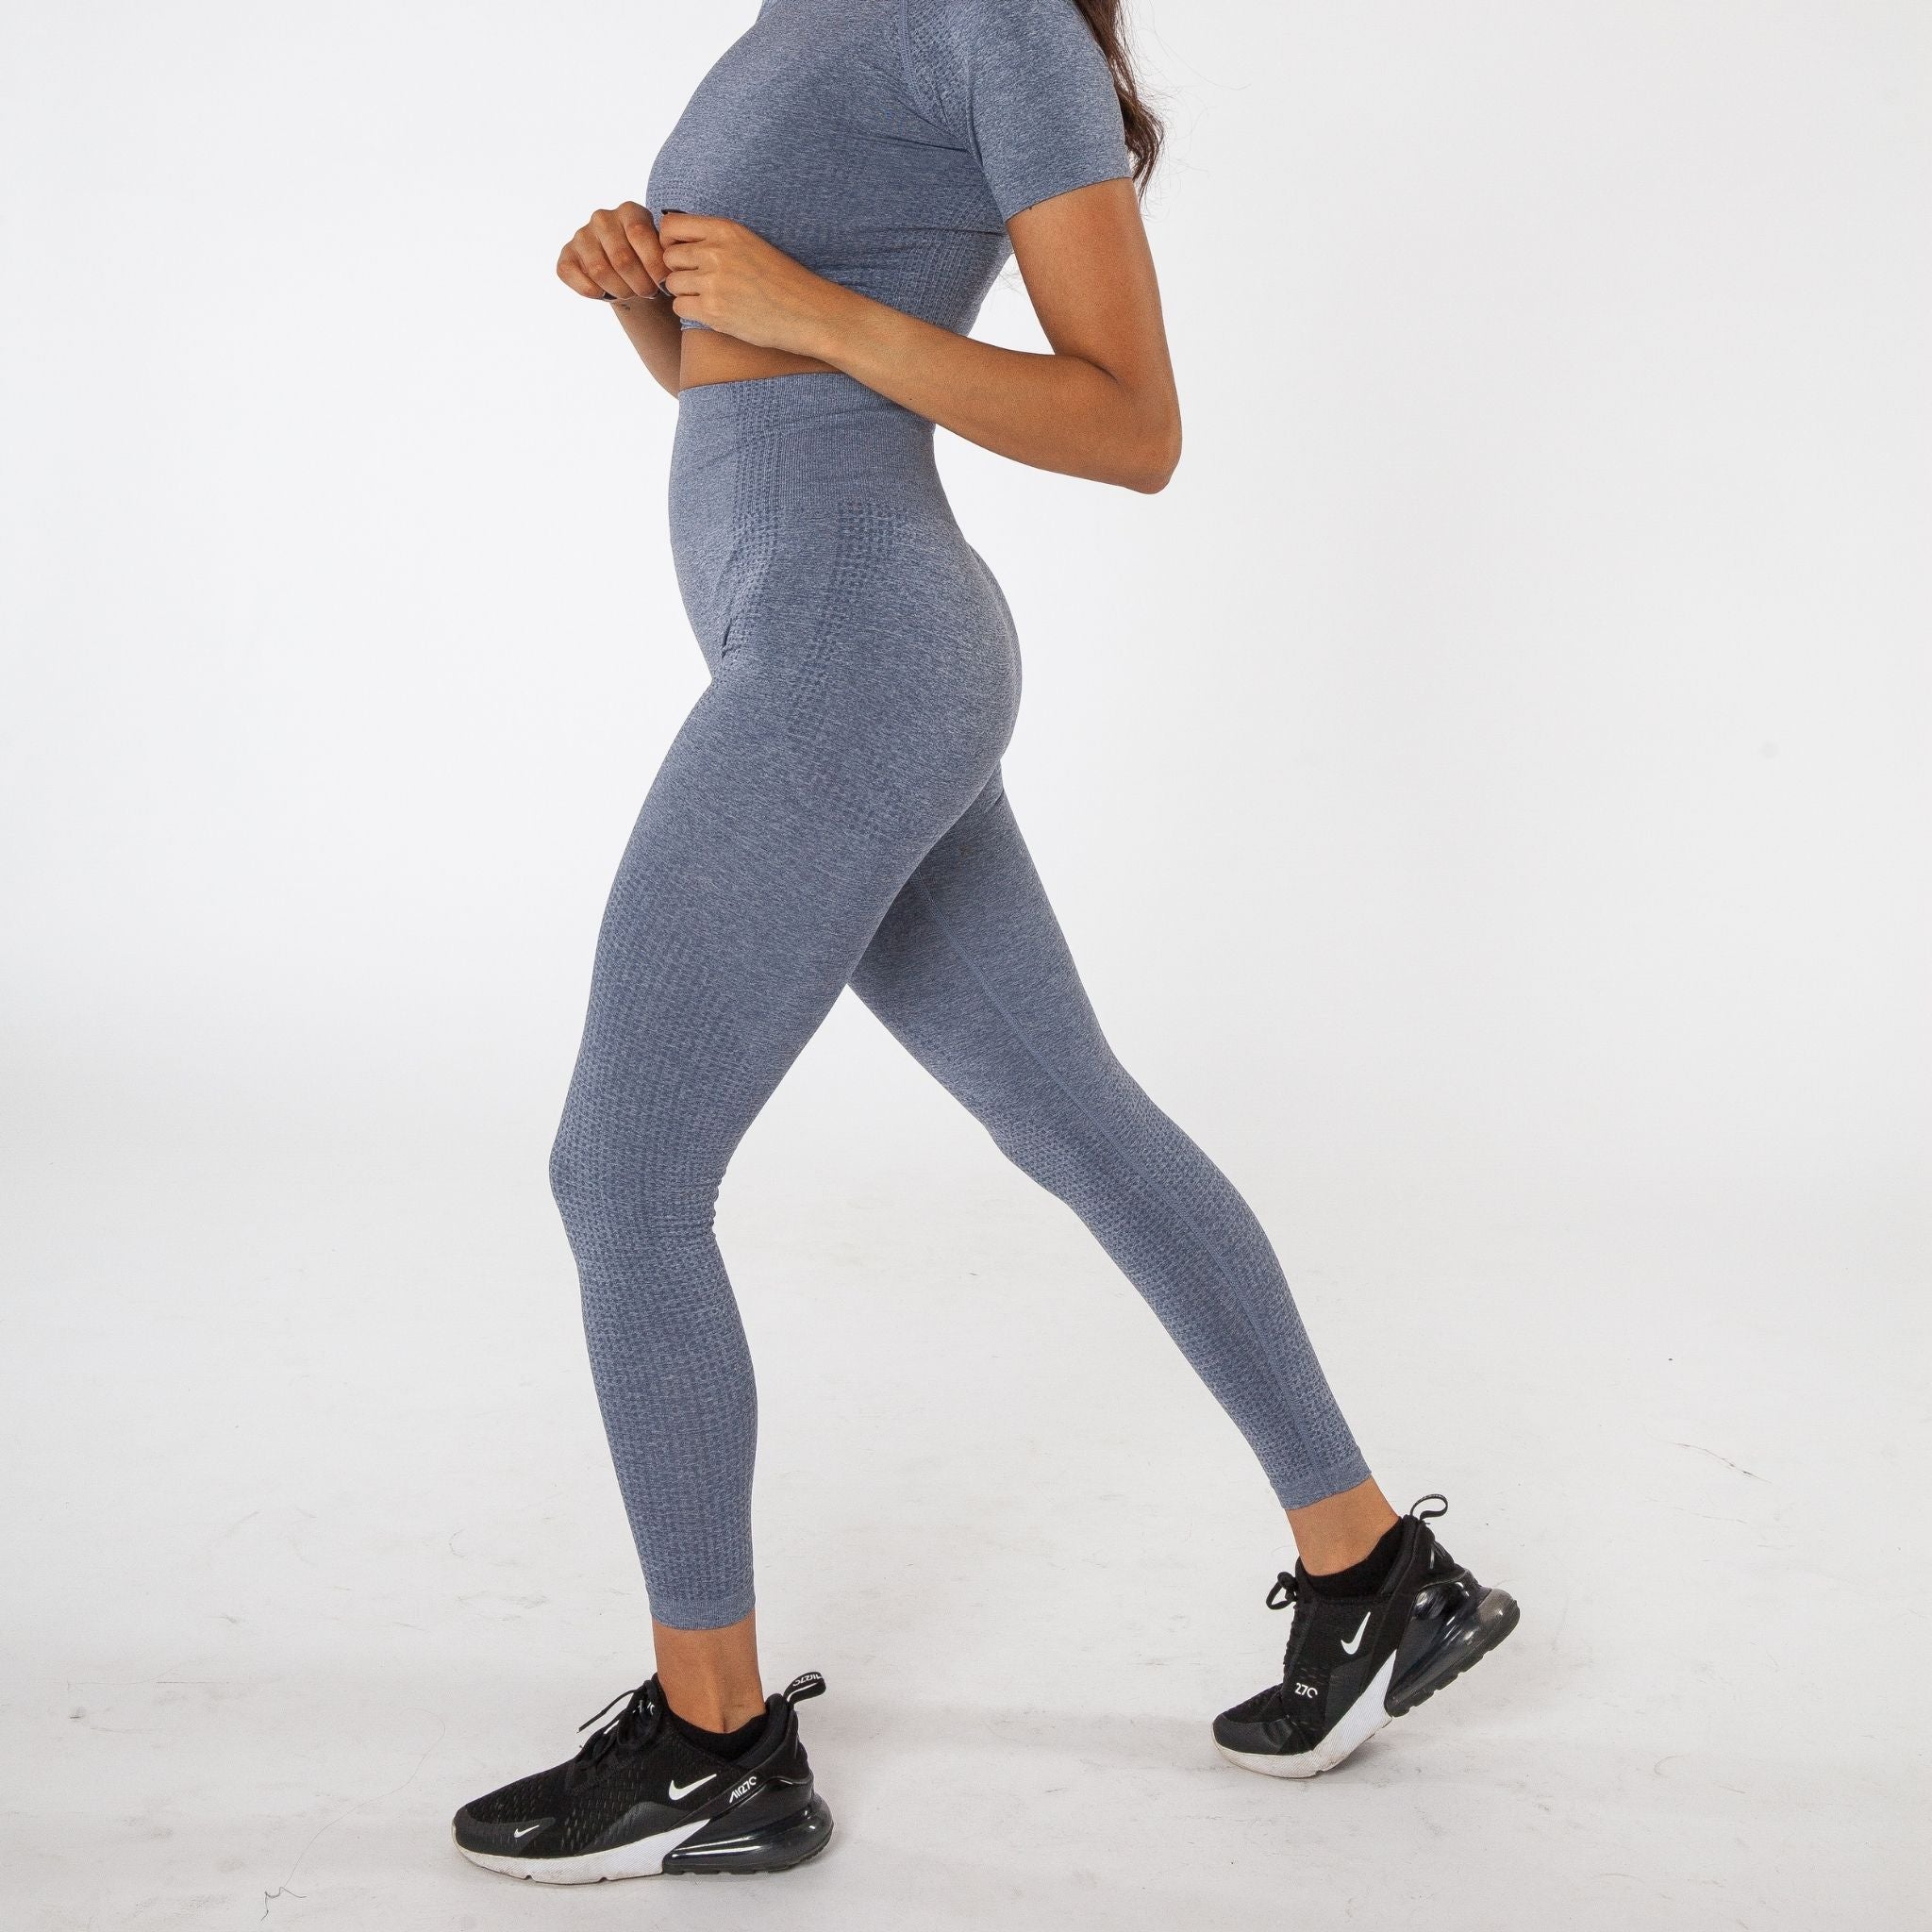 Navy blue seamless gym activewear leggings